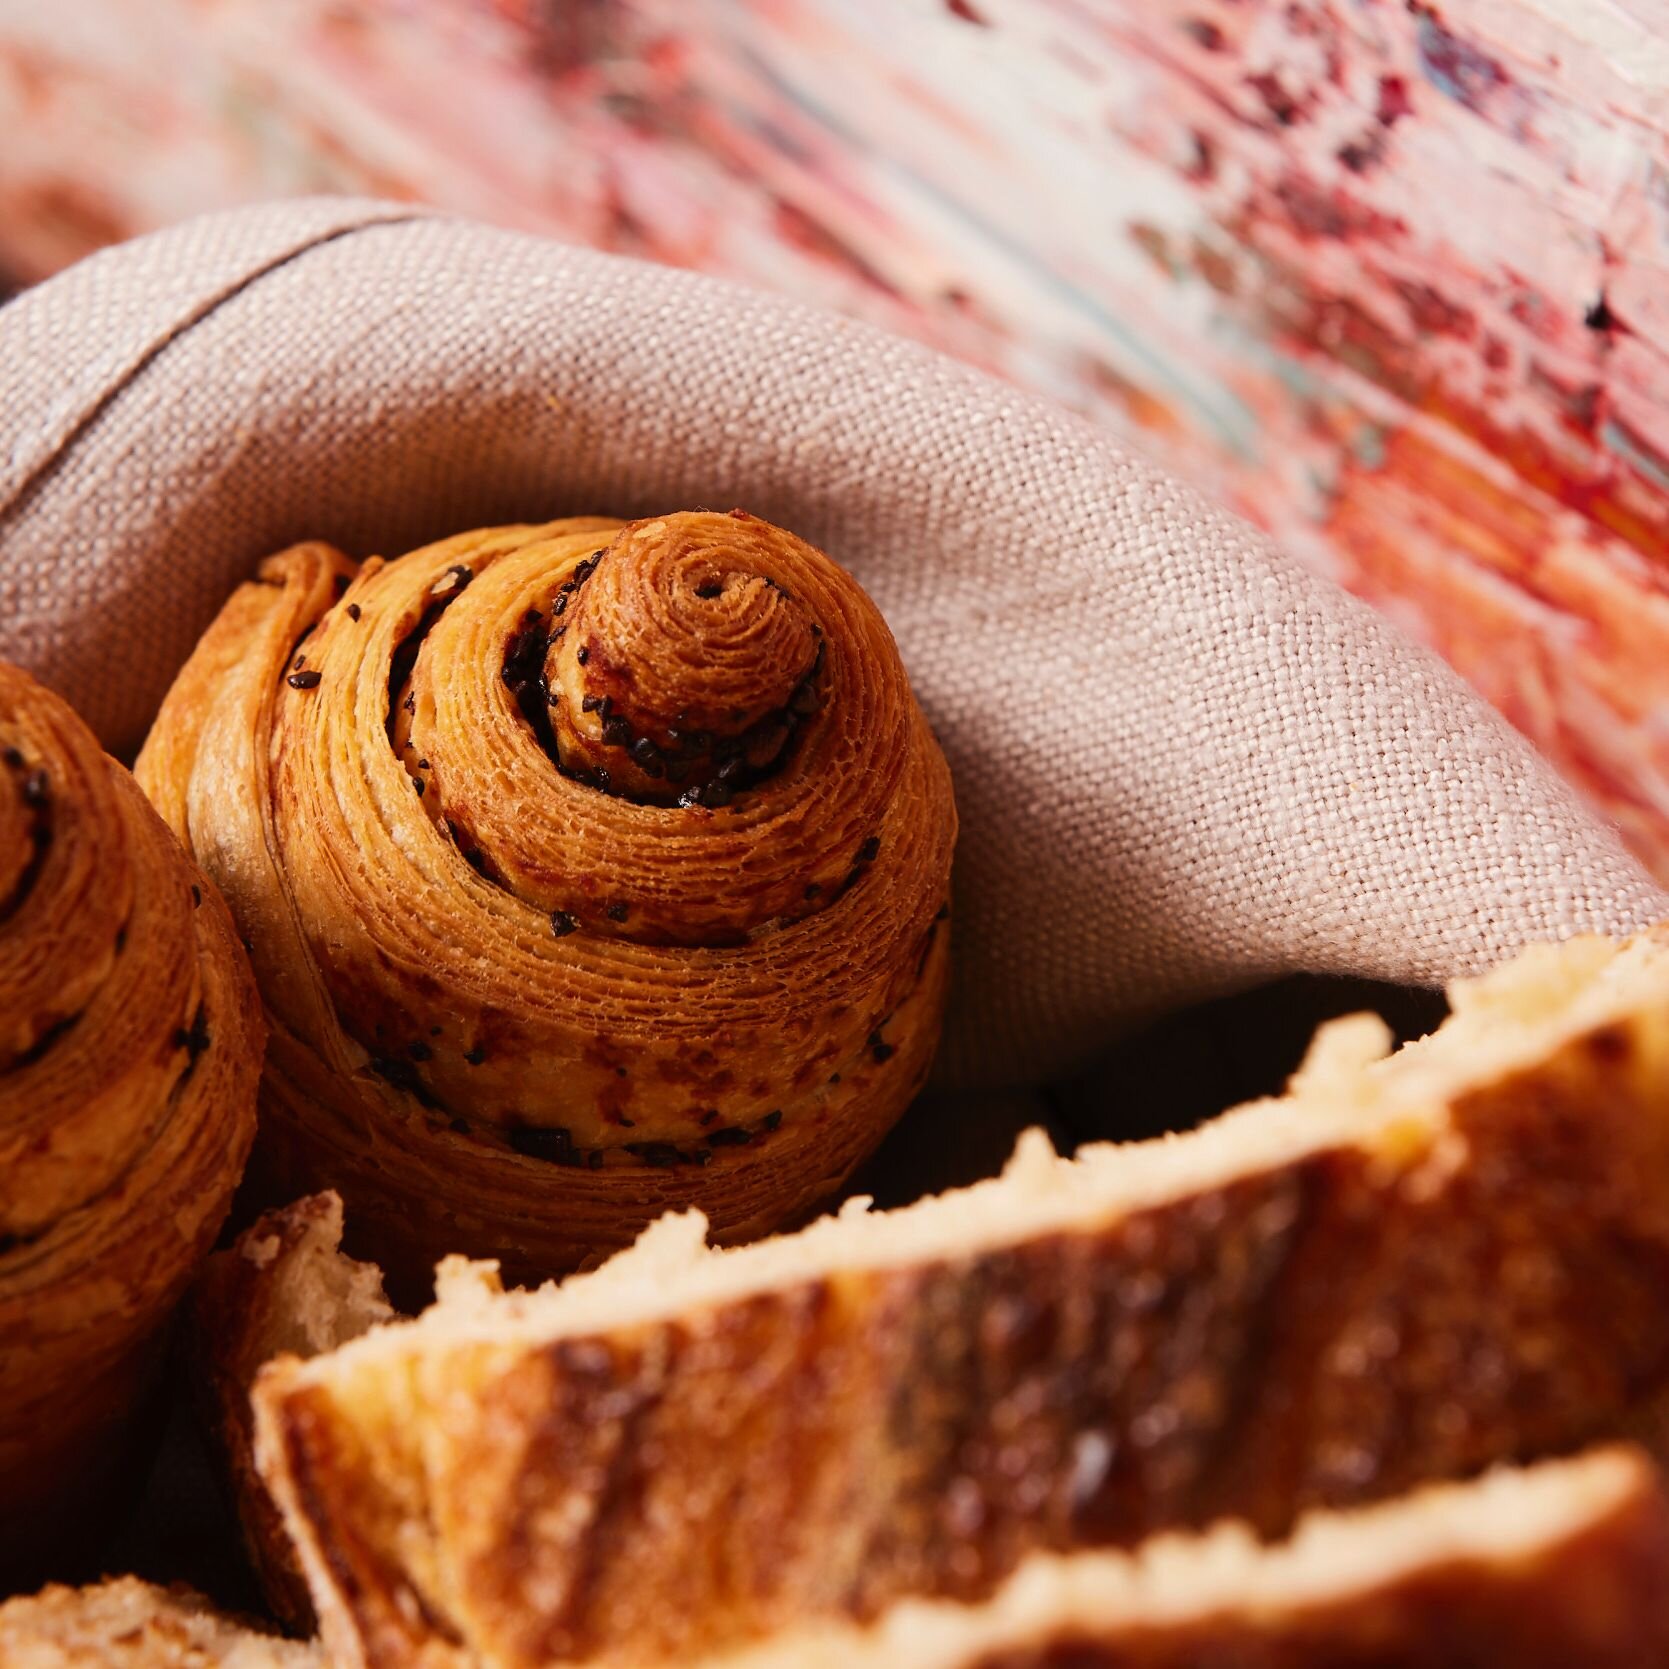 Our house-made Kombu scrolls are baked each morning using organic, stoneground flour. Served with whipped Truffle butter. 

#tetsuyas #tetsuyasrestaurant #tetsuyassydney #tetsuyawakuda #finedining #sydneyrestaurants #bestrestaurants #wheretoeatsydney